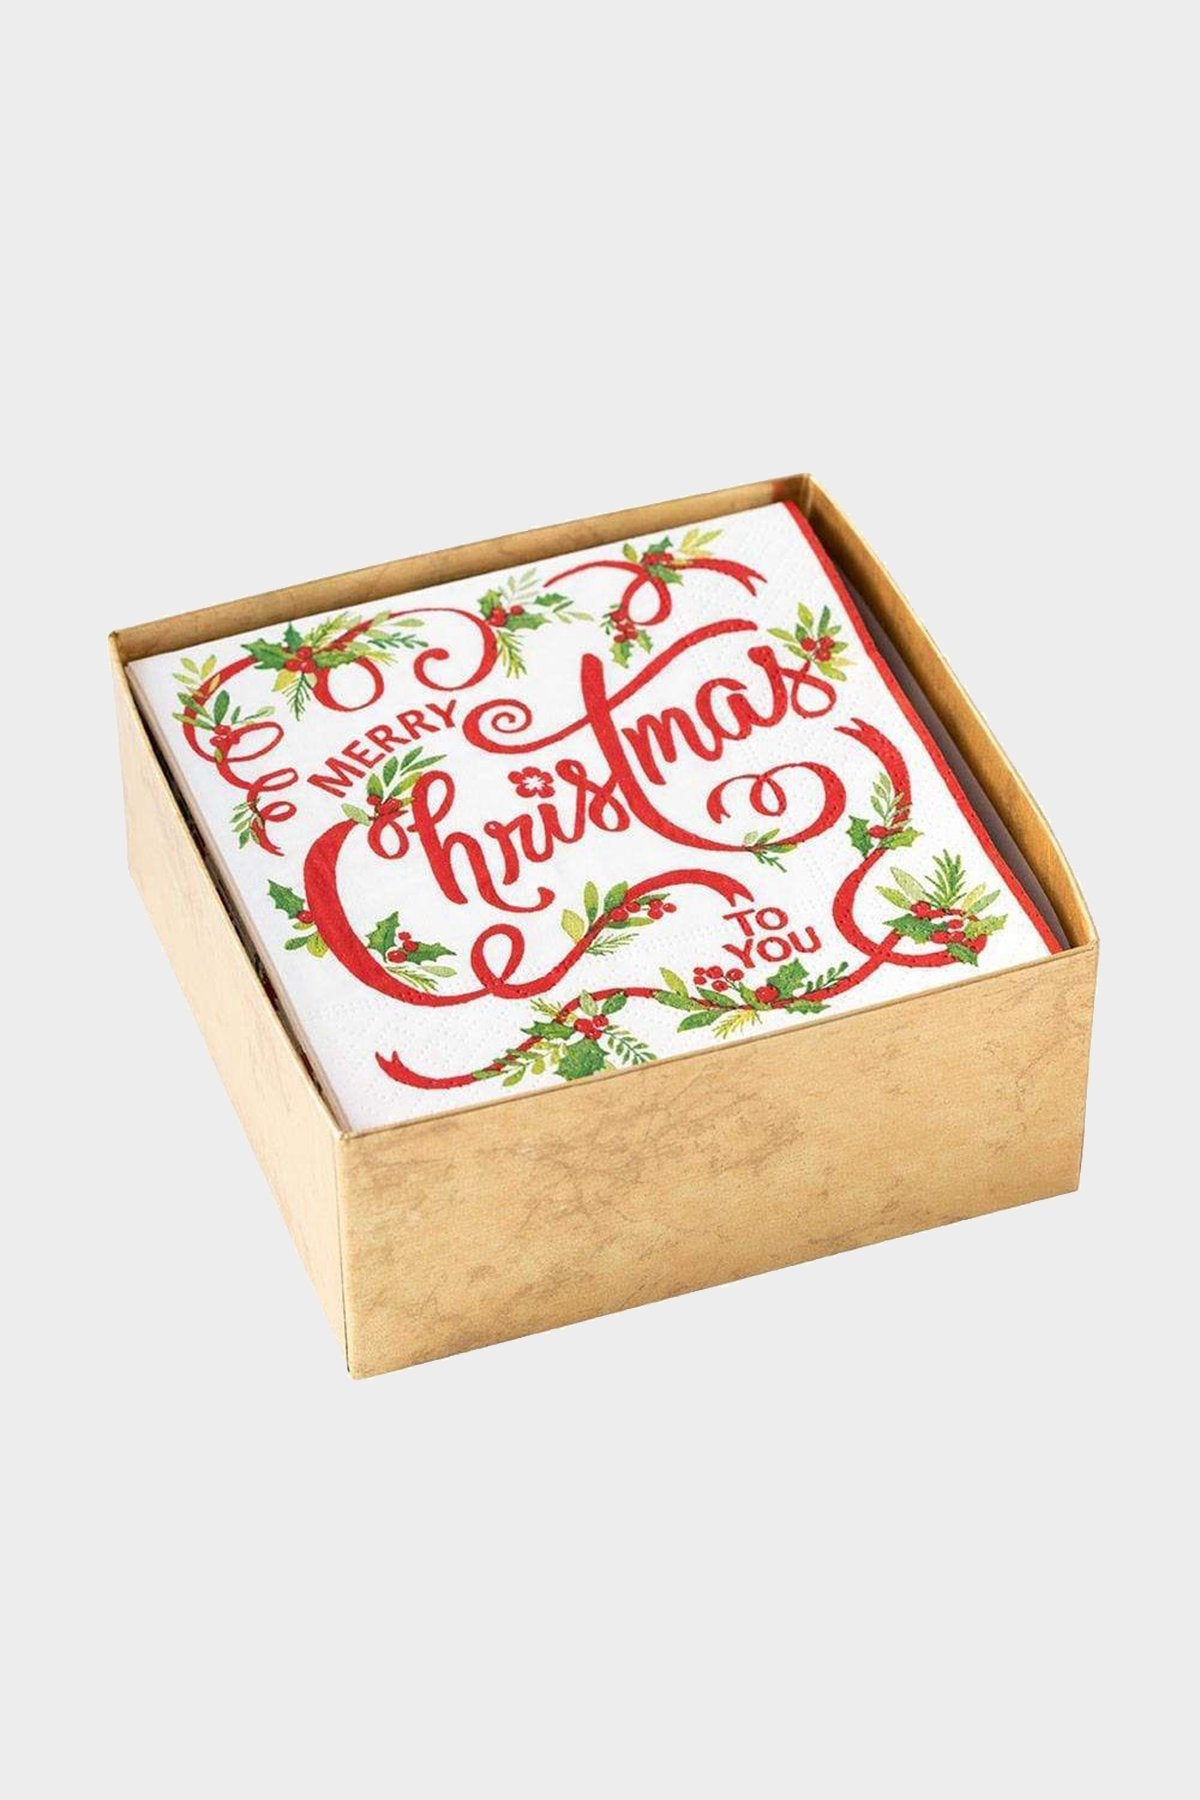 Merry Christmas to You Boxed Paper Cocktail Napkins - shop-olivia.com